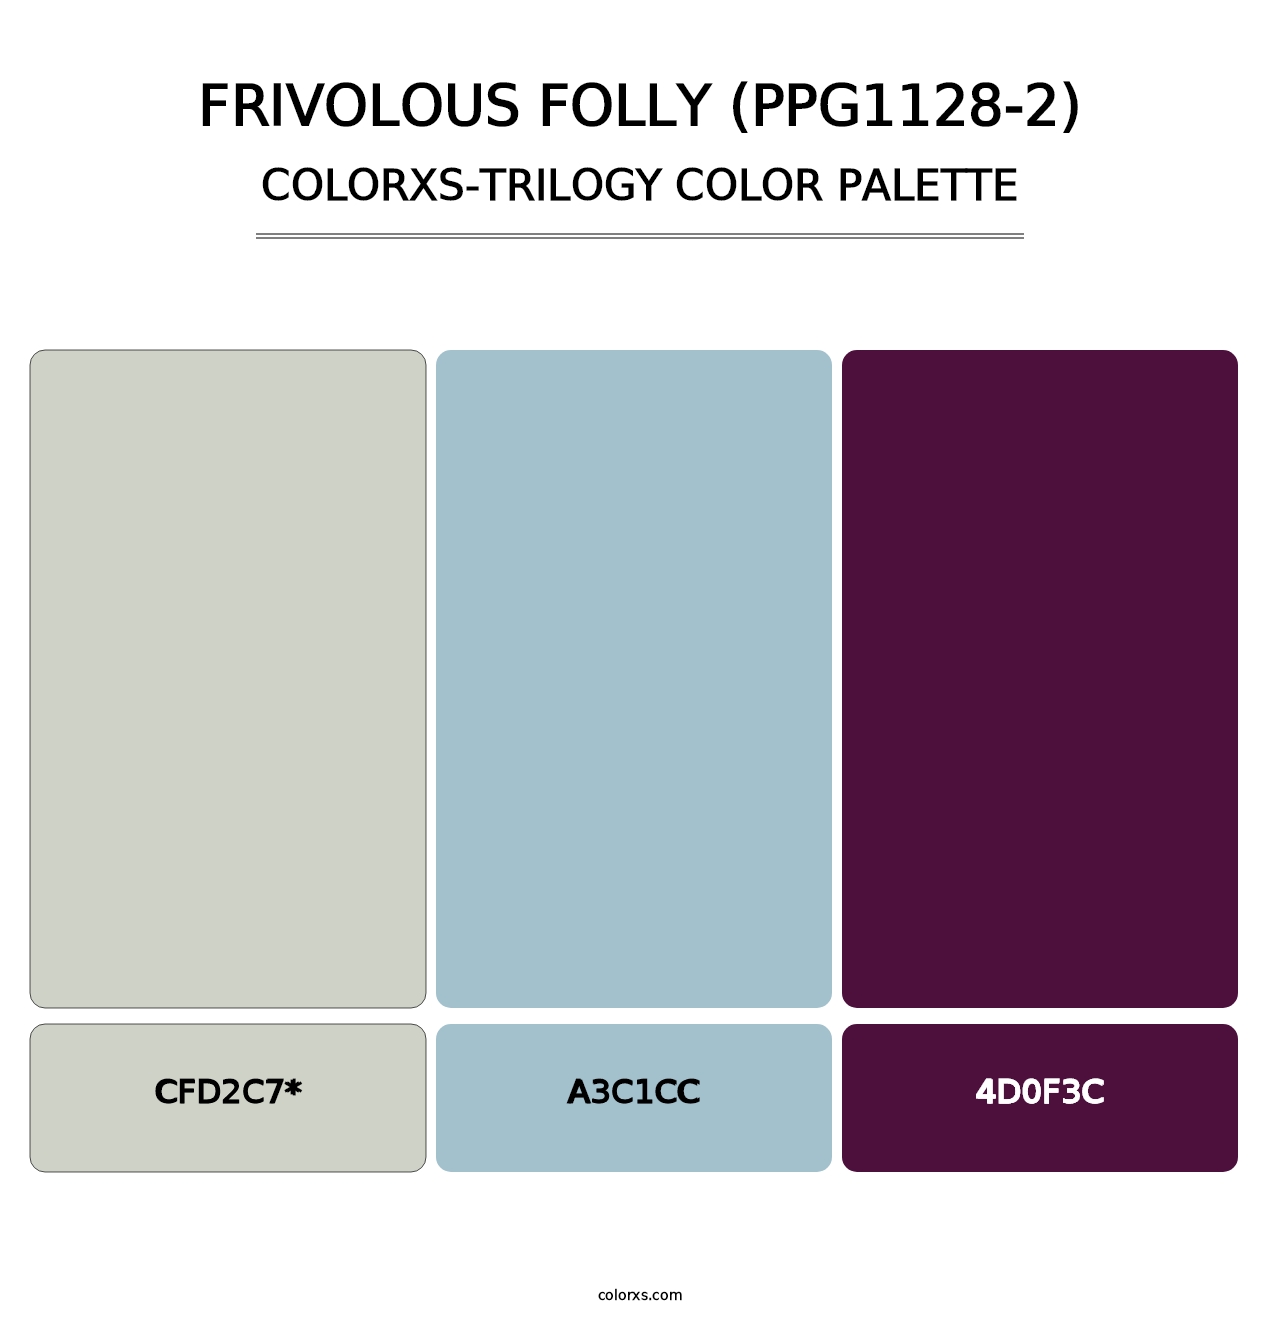 Frivolous Folly (PPG1128-2) - Colorxs Trilogy Palette